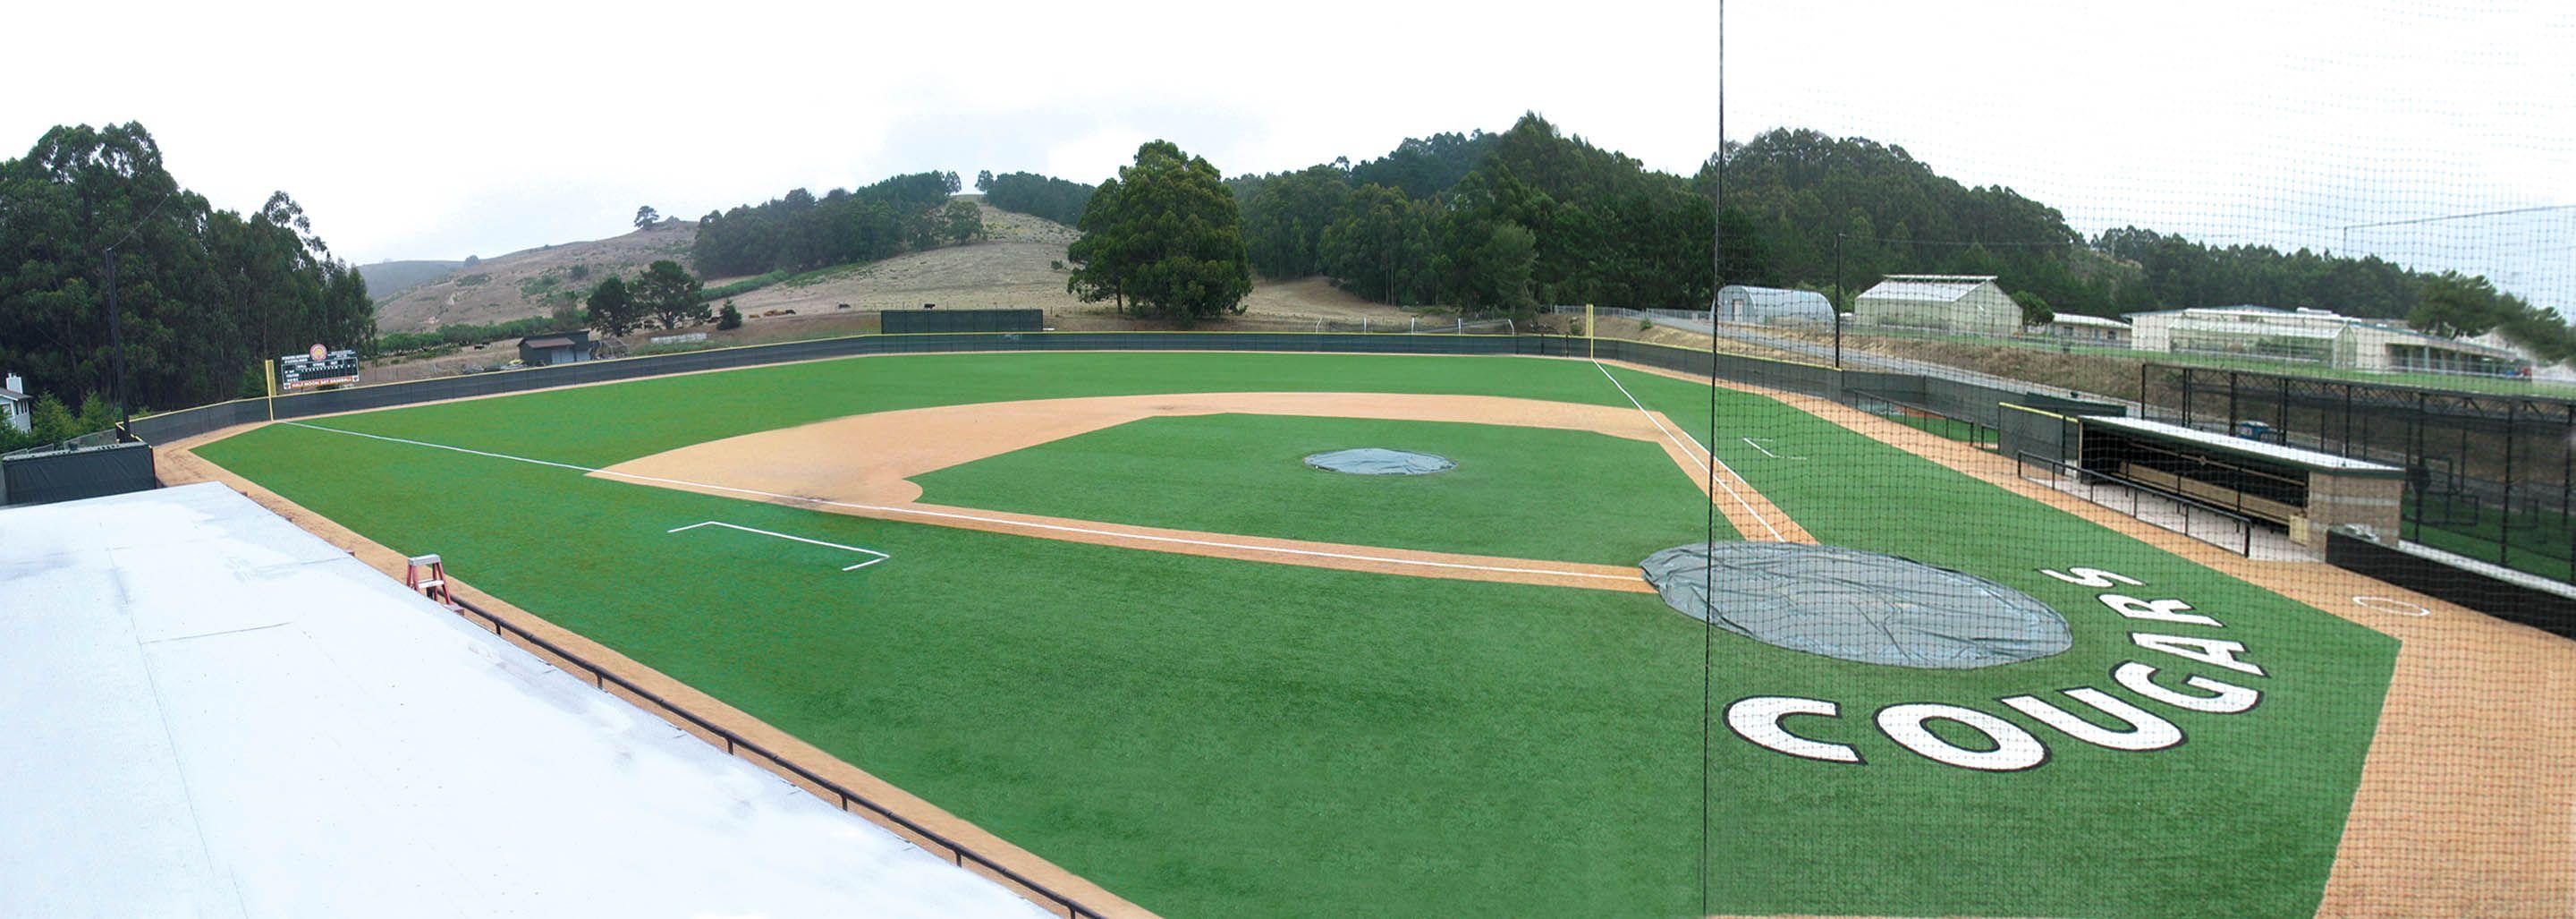 Baseball Field Logo - Half Moon Bay High School Sports Complex Landscape Design